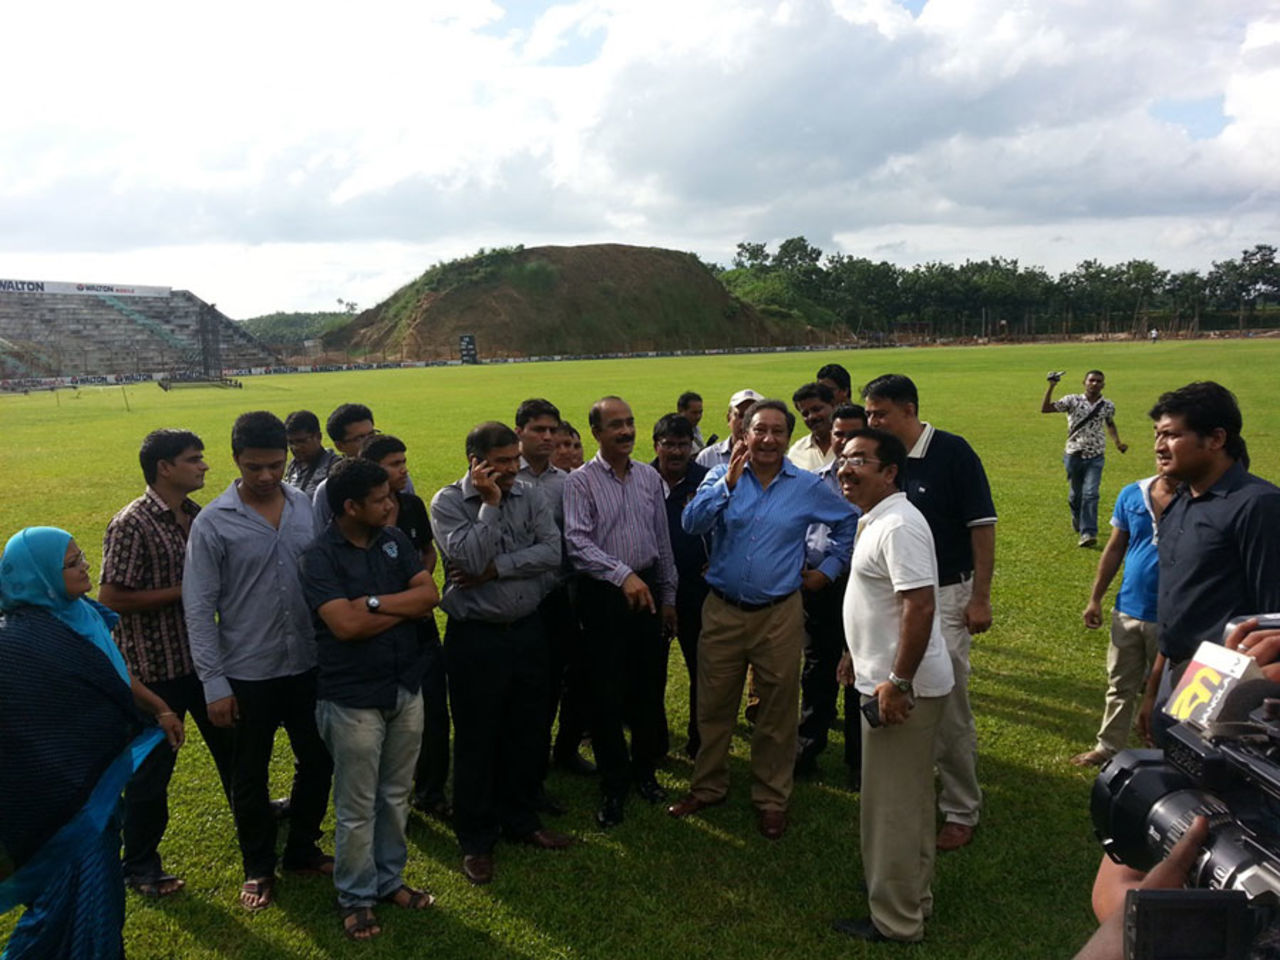 BCB President Nazmul Hassan at Sylhet Divisional Stadium, Sylhet, July 8, 2013